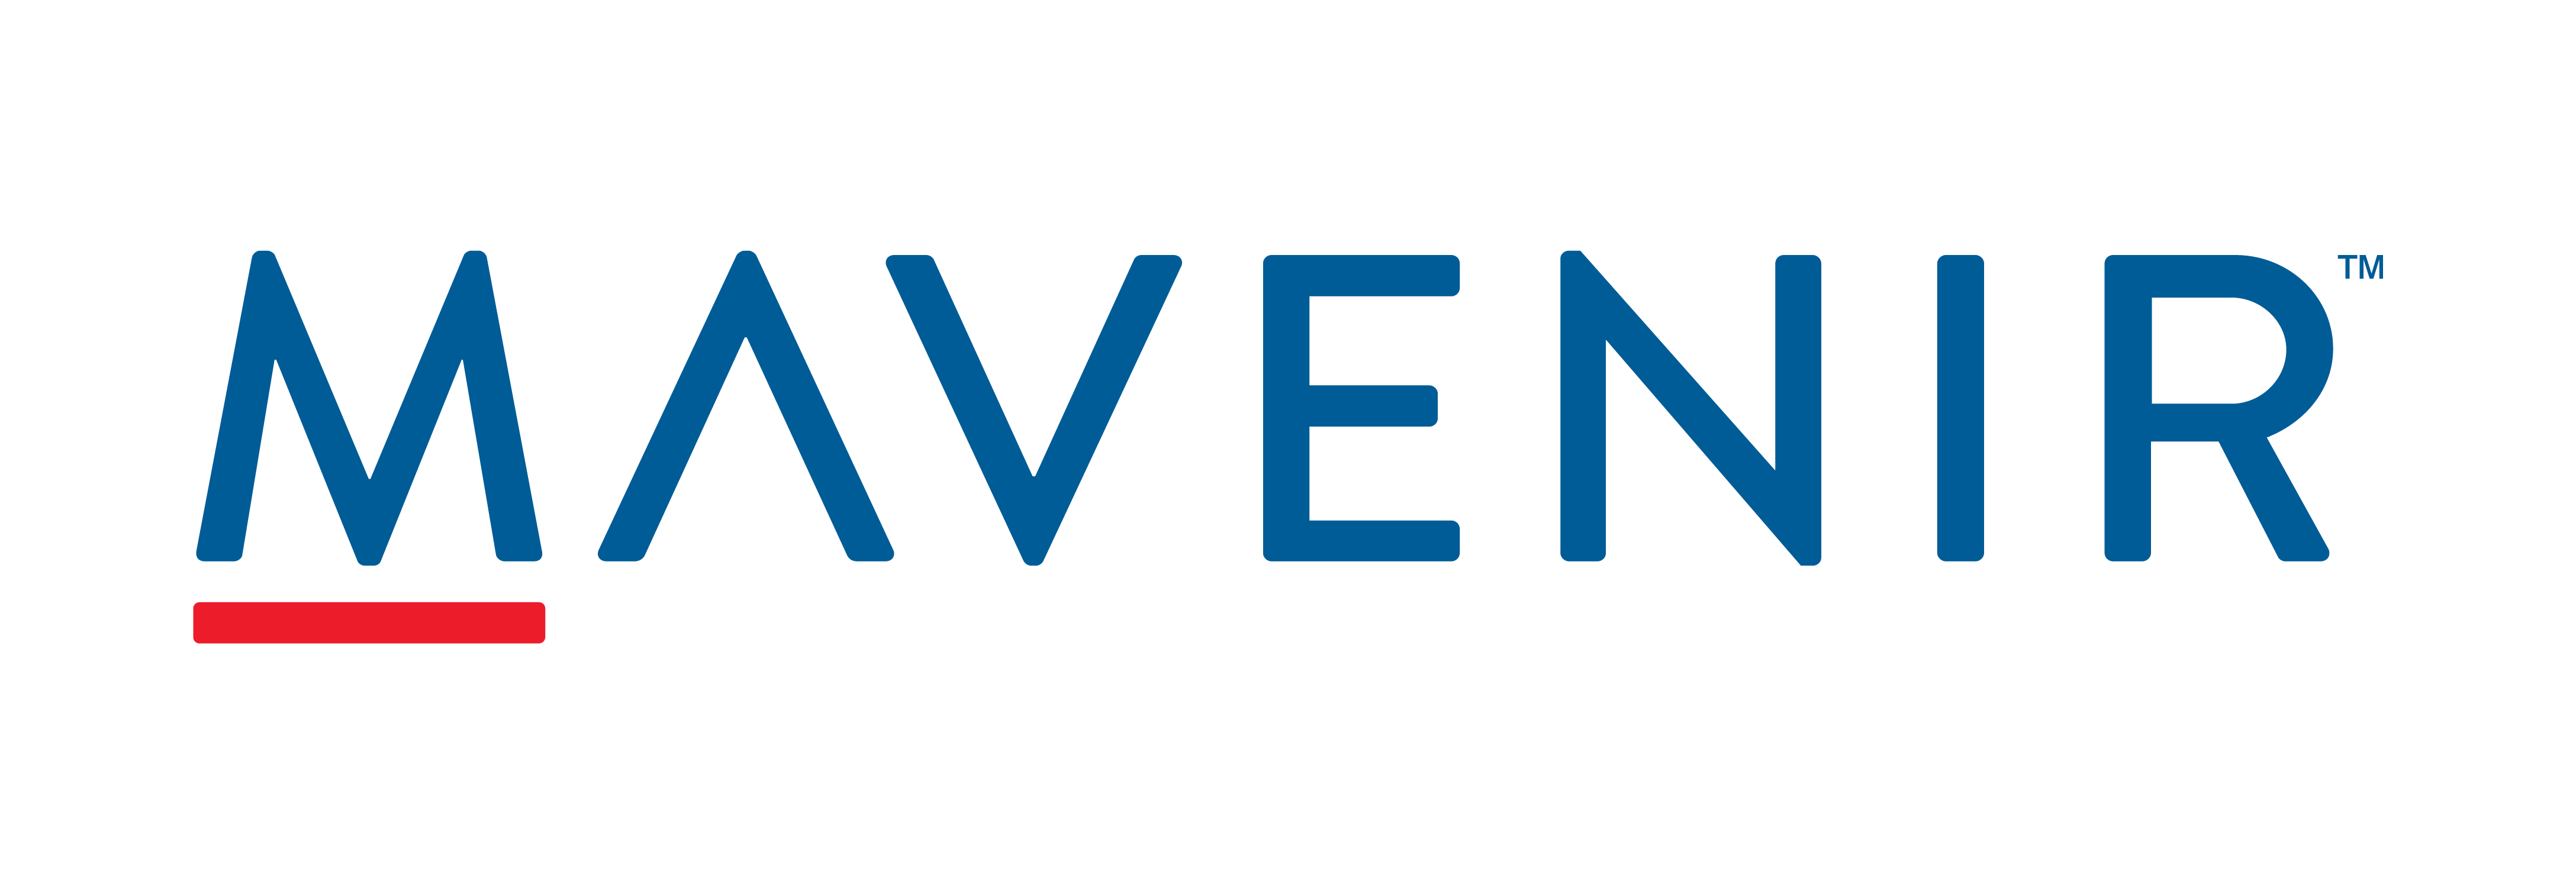 Mavenir (image)